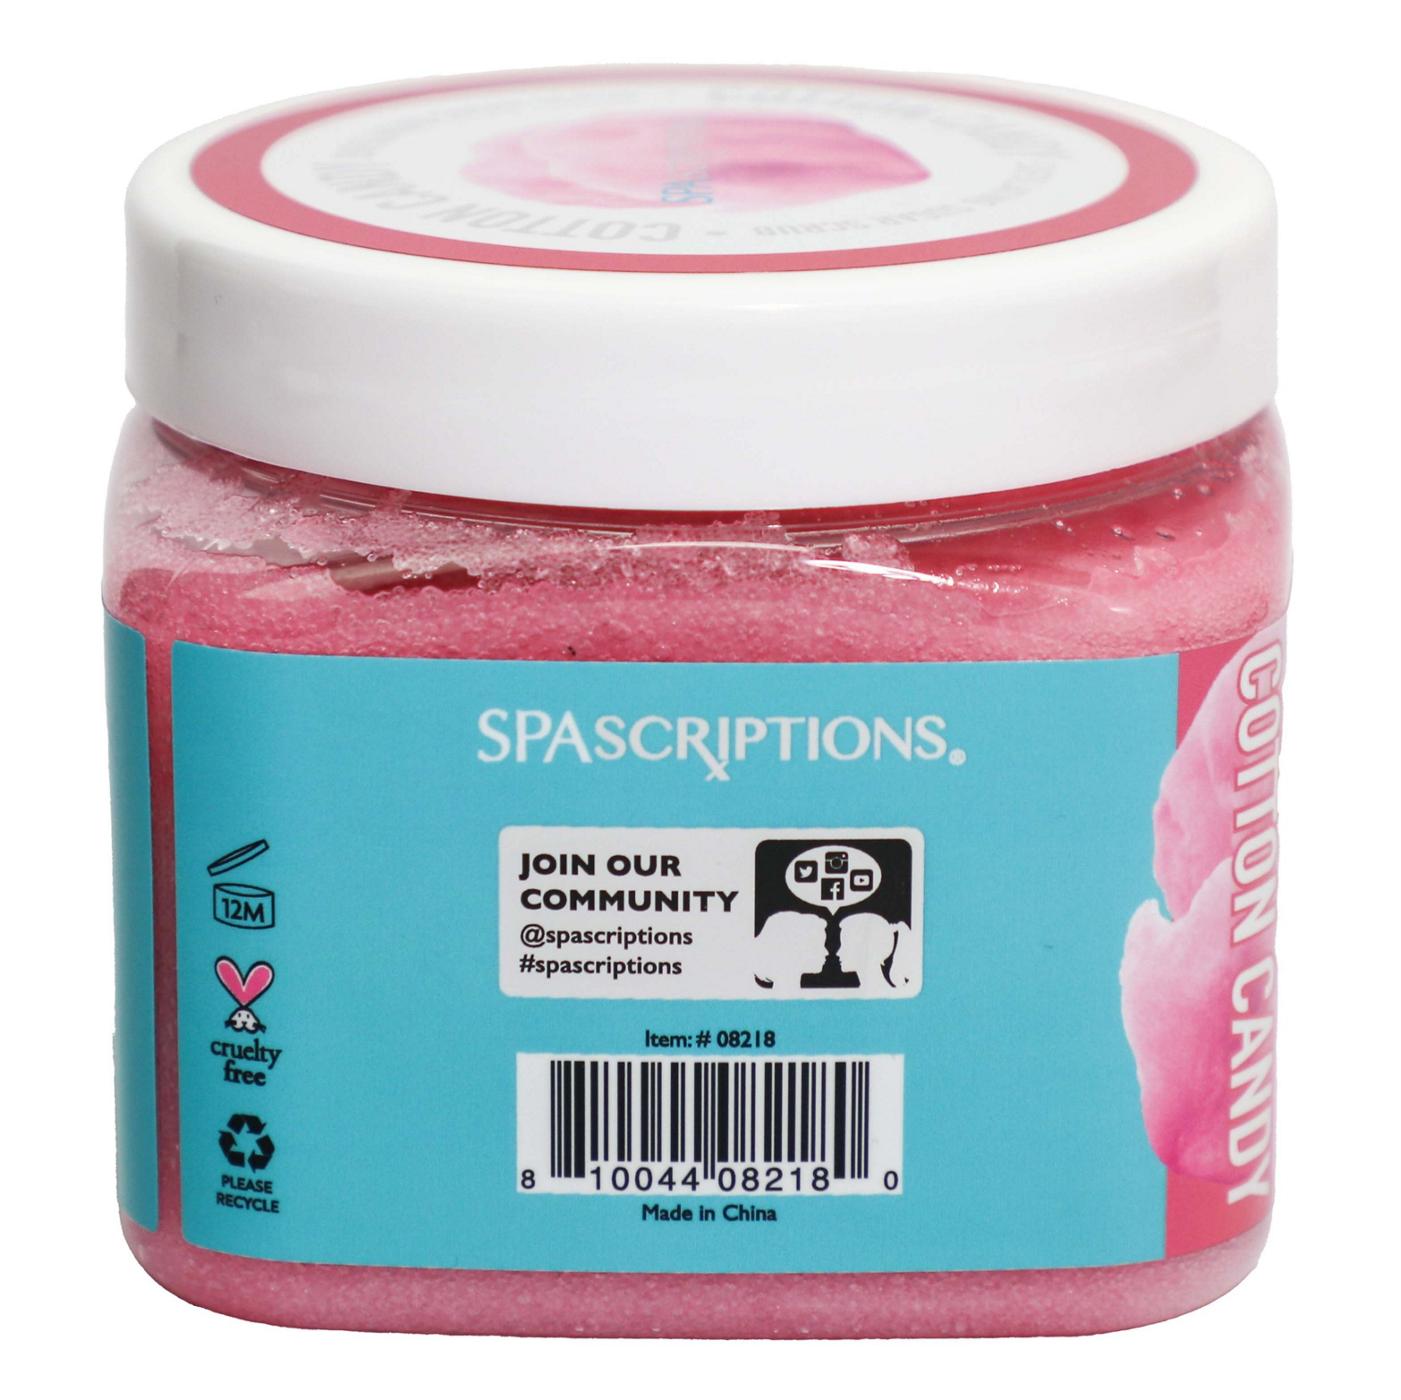 SpaScriptions Exfoliating Sugar Scrub - Cotton Candy; image 6 of 6